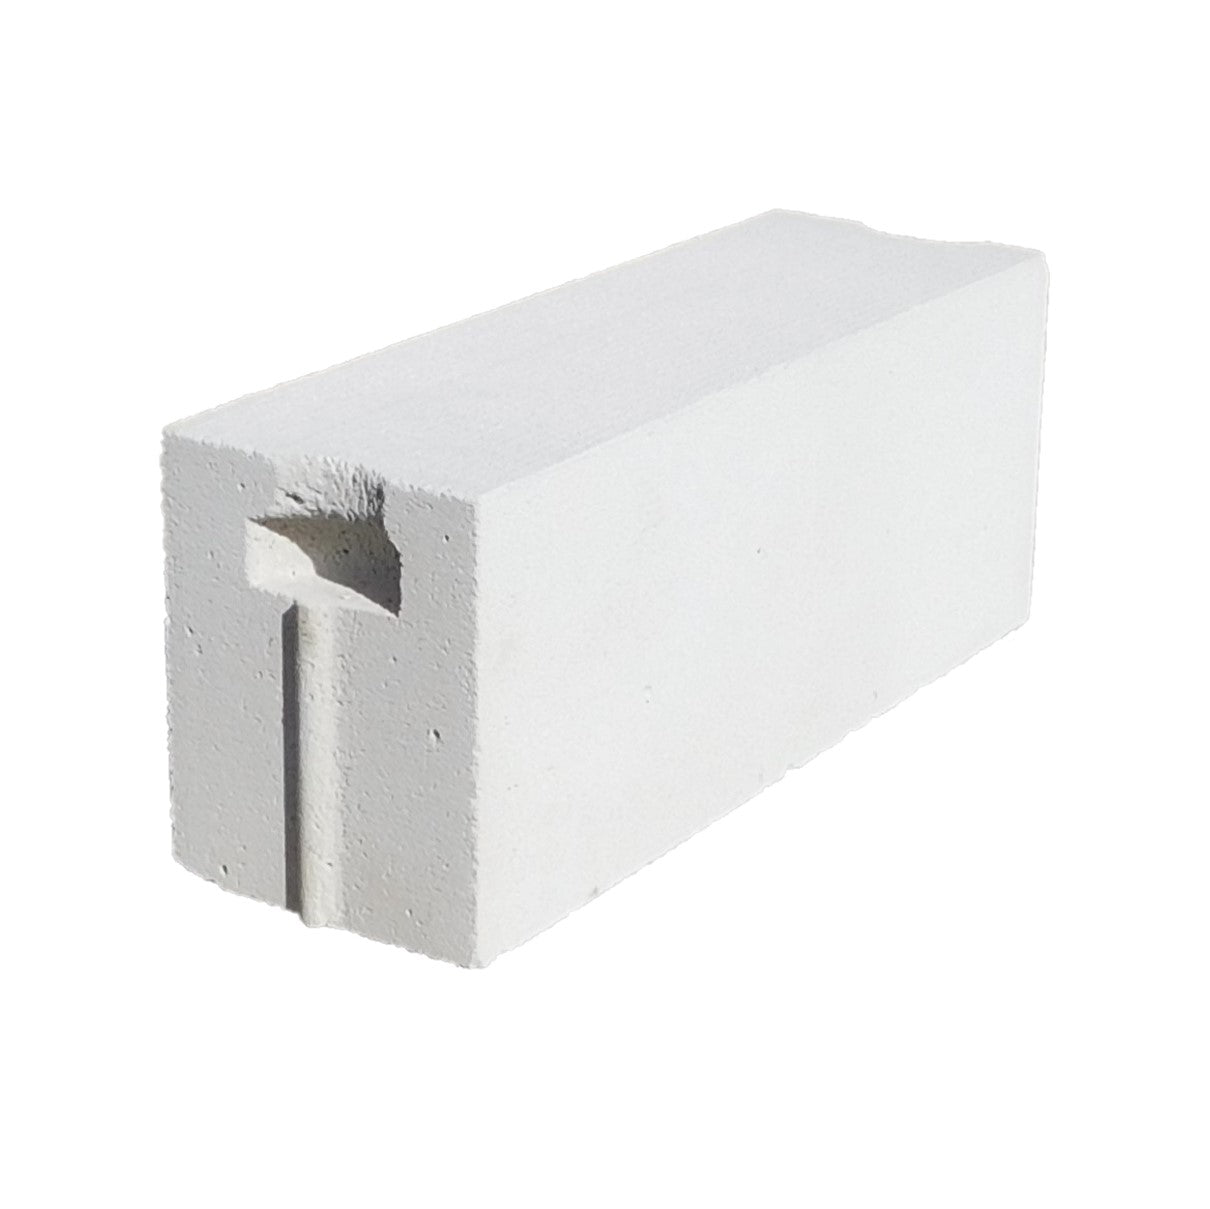 Aerated concrete Block C4/600 625x250x175mm (pallet)